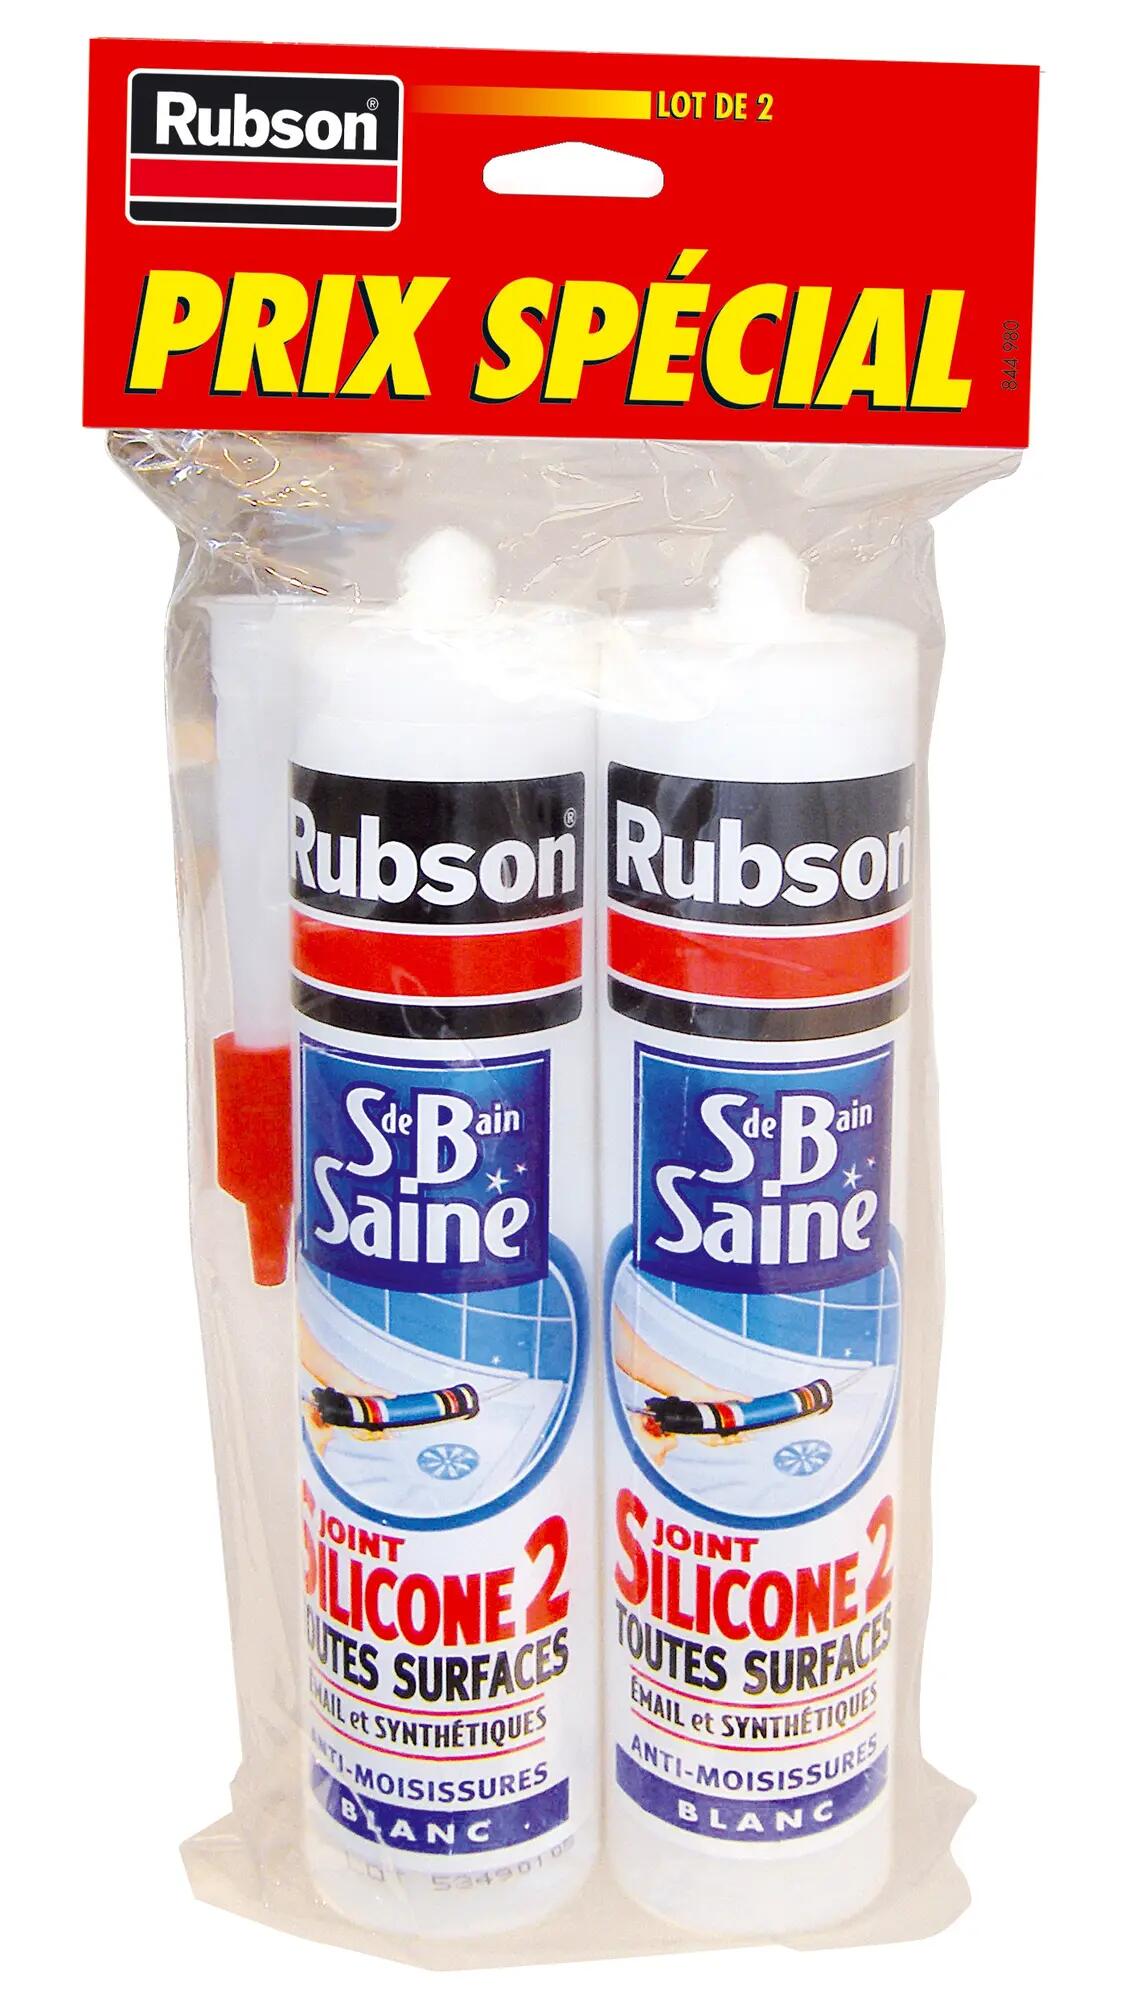 Silicone bain & cuisine blanc RUBSON : la cartouche de 200 ml à